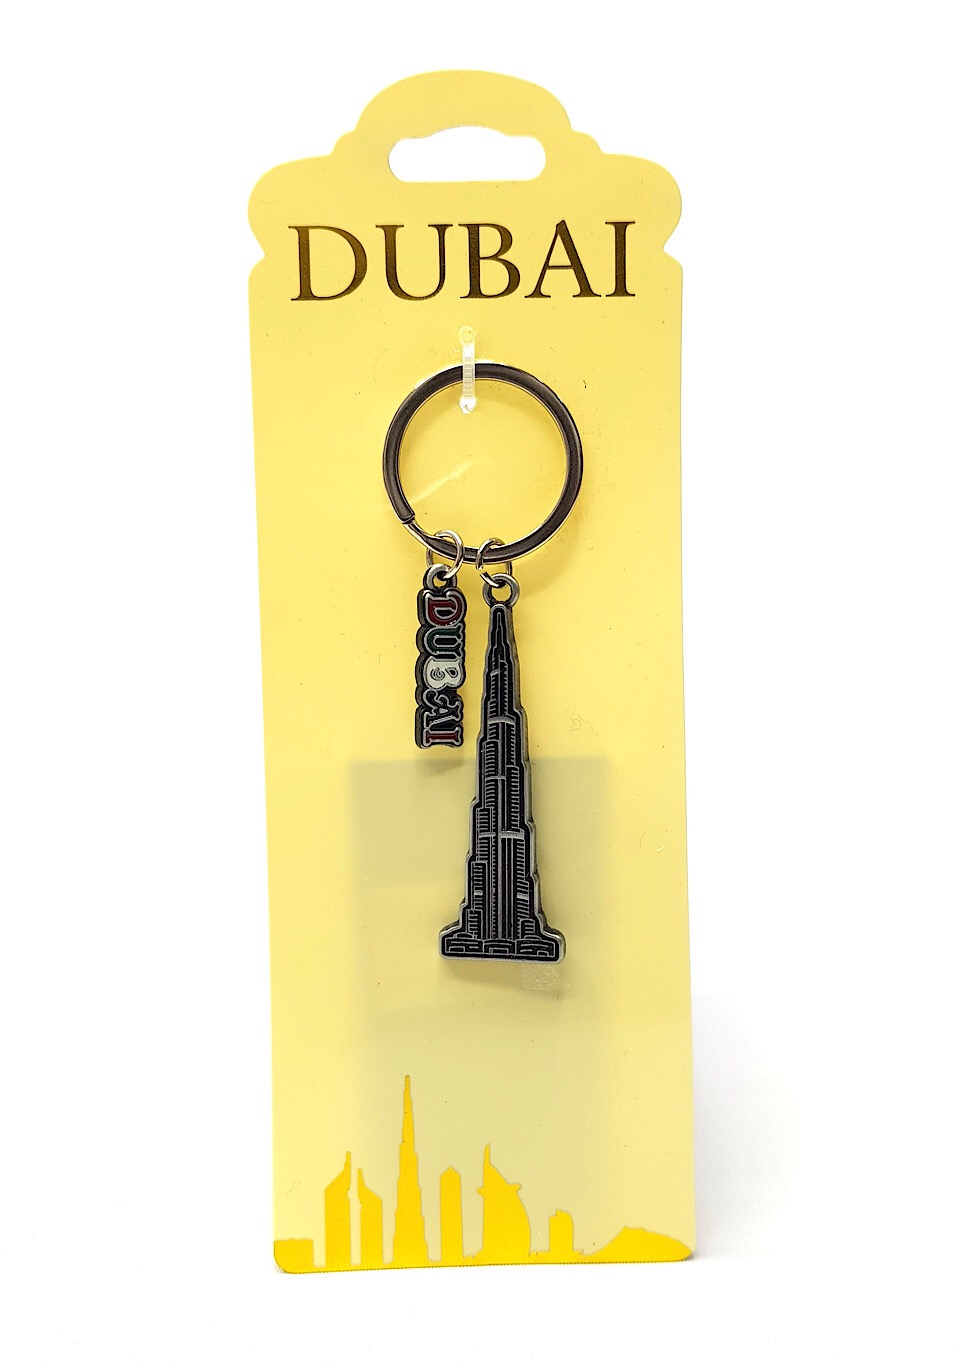 Dubai Burj Khalifa Tower Keychain